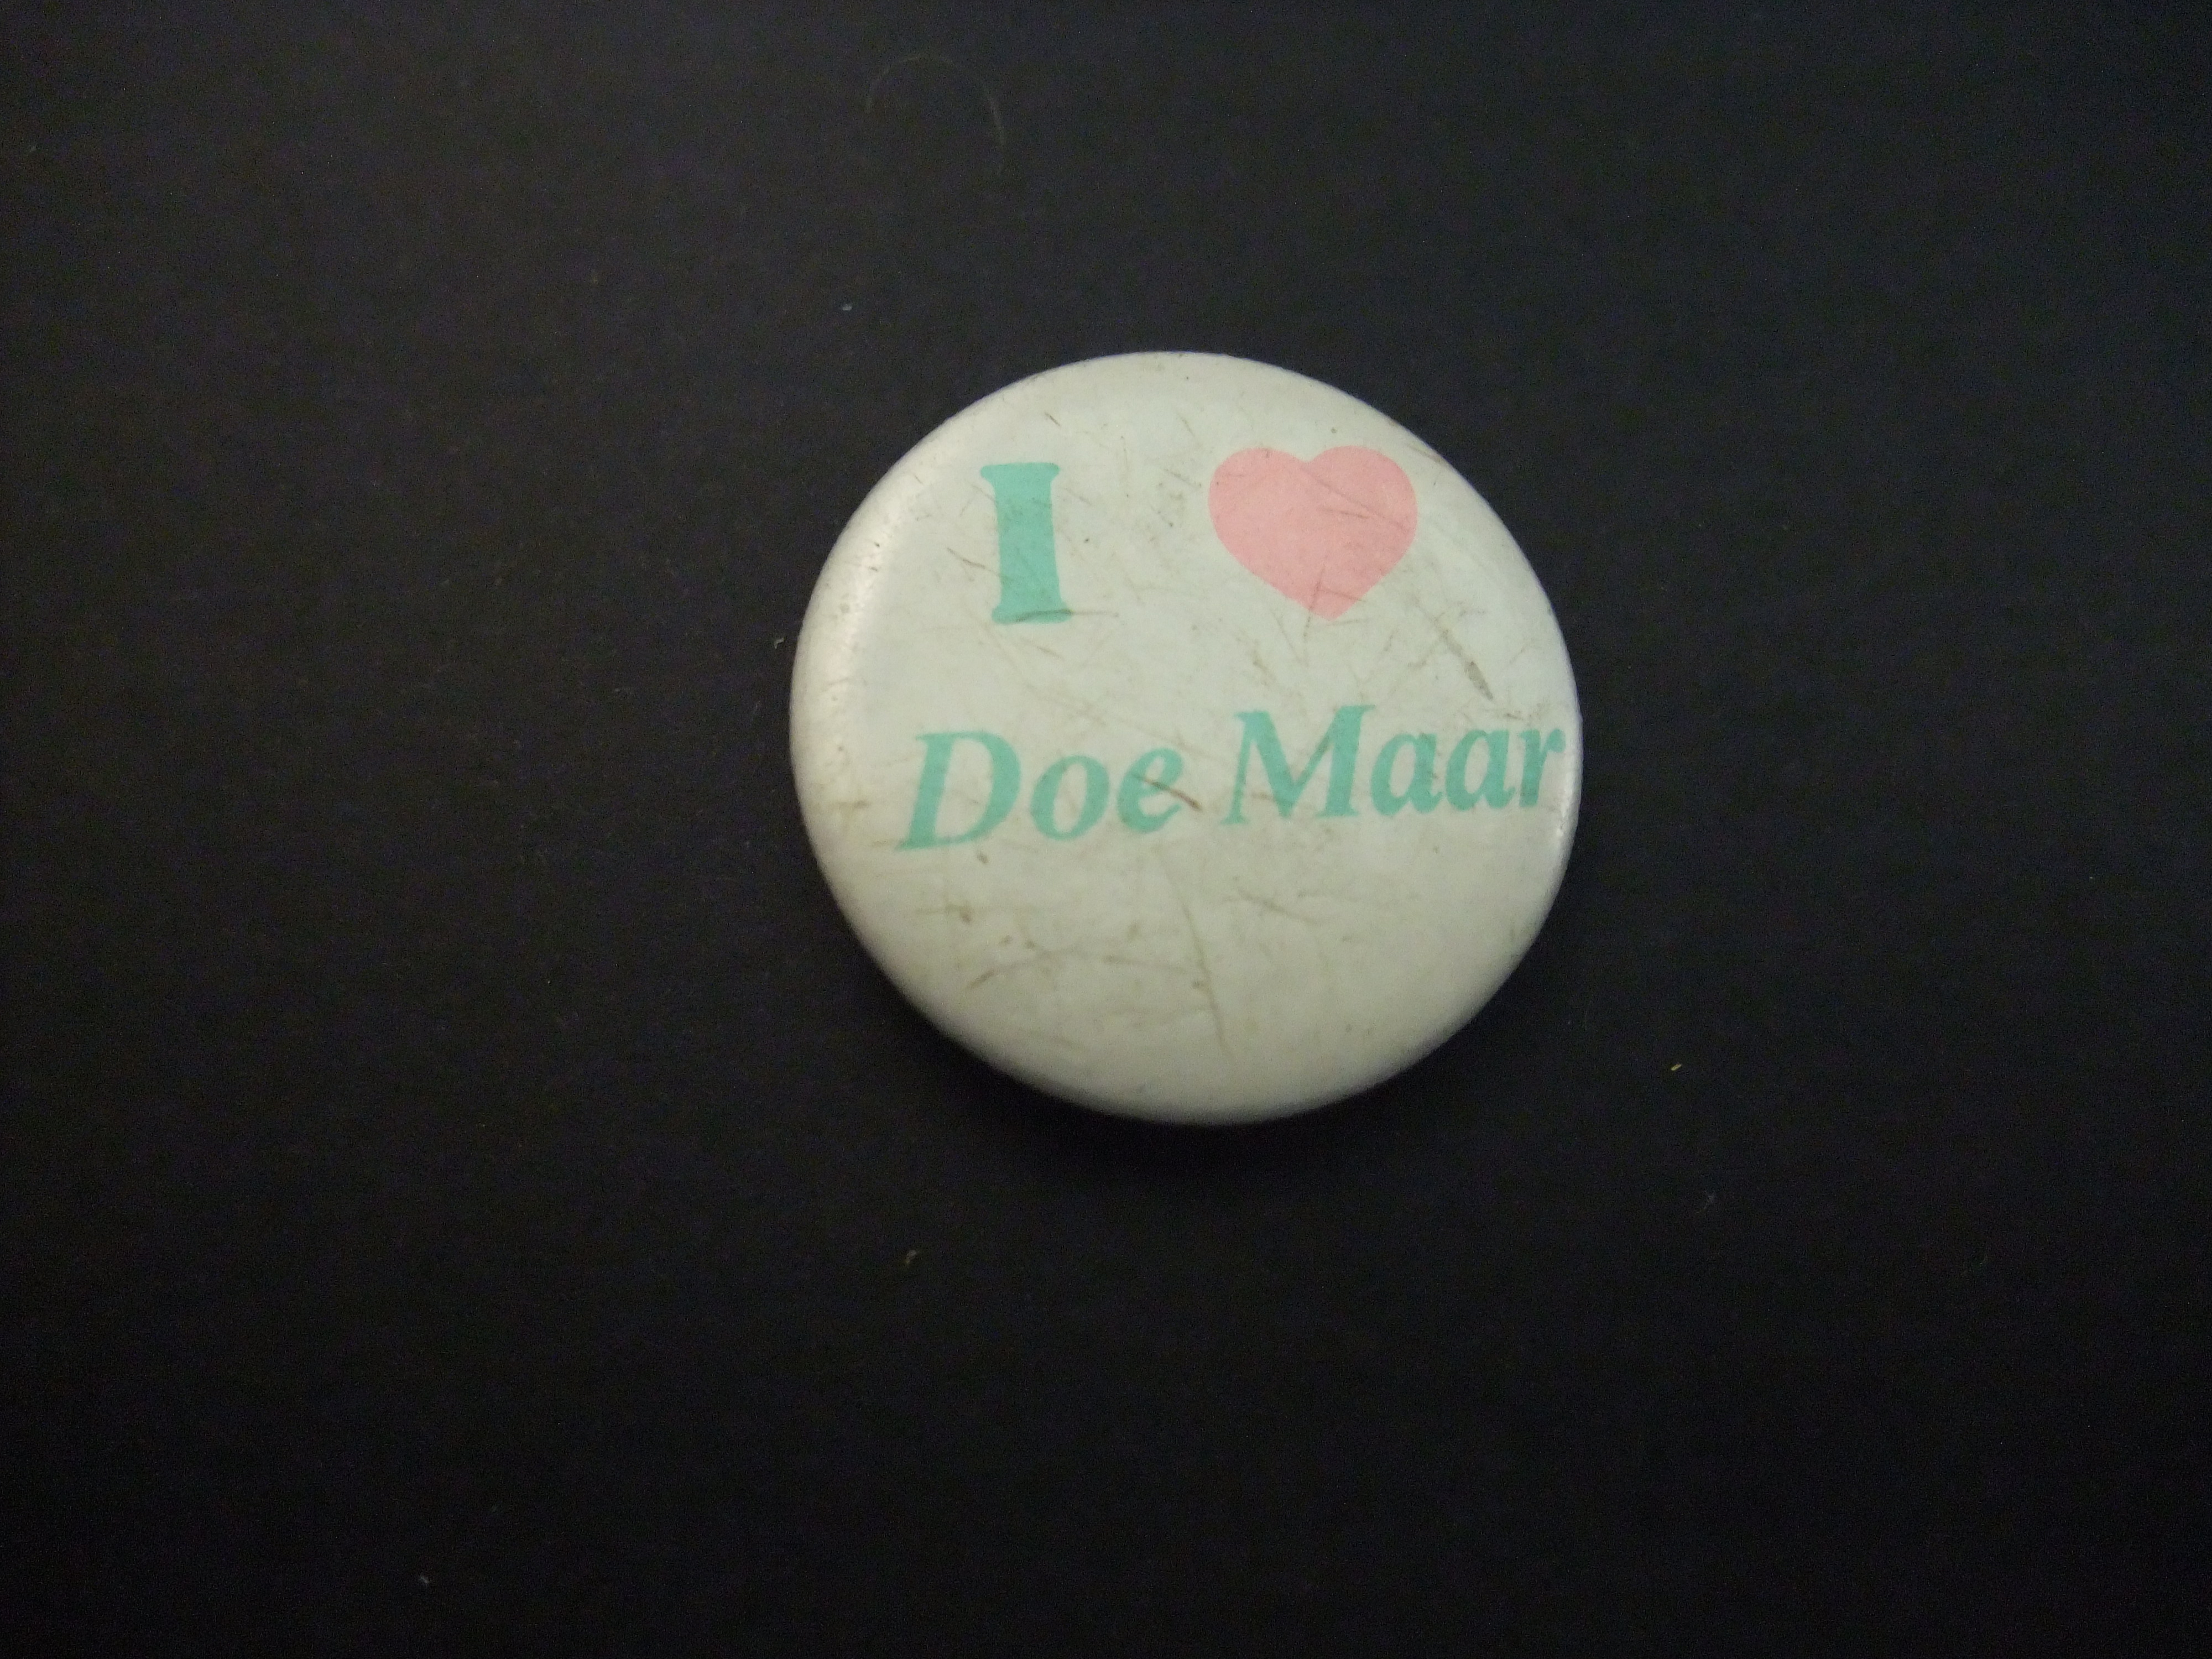 I love Doe Maar Nederlandstalige popgroep